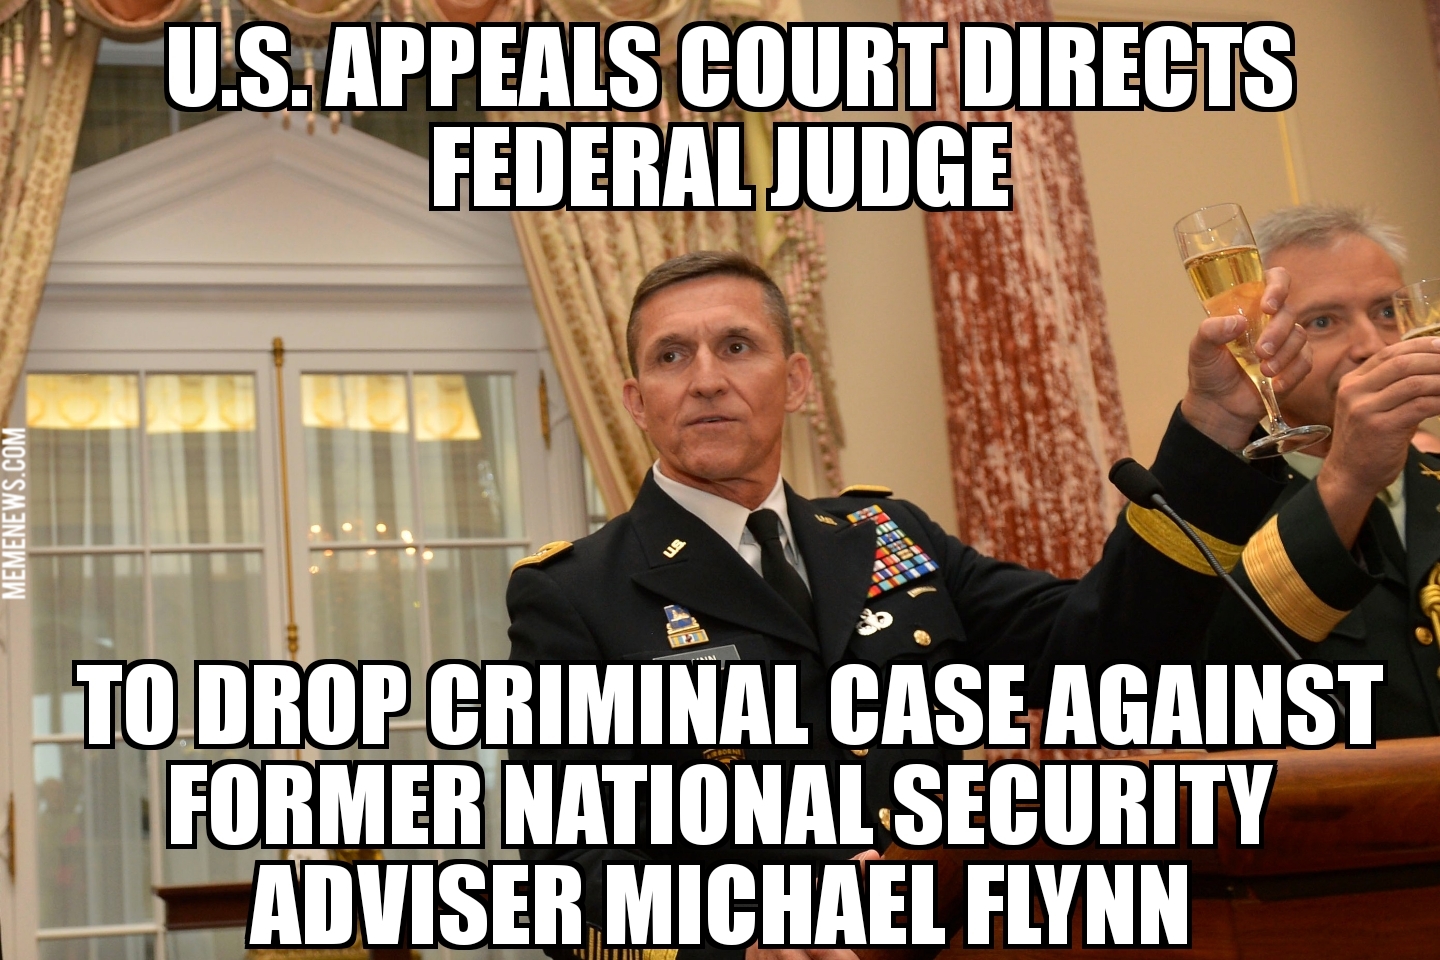 Case dropped against Michael Flynn